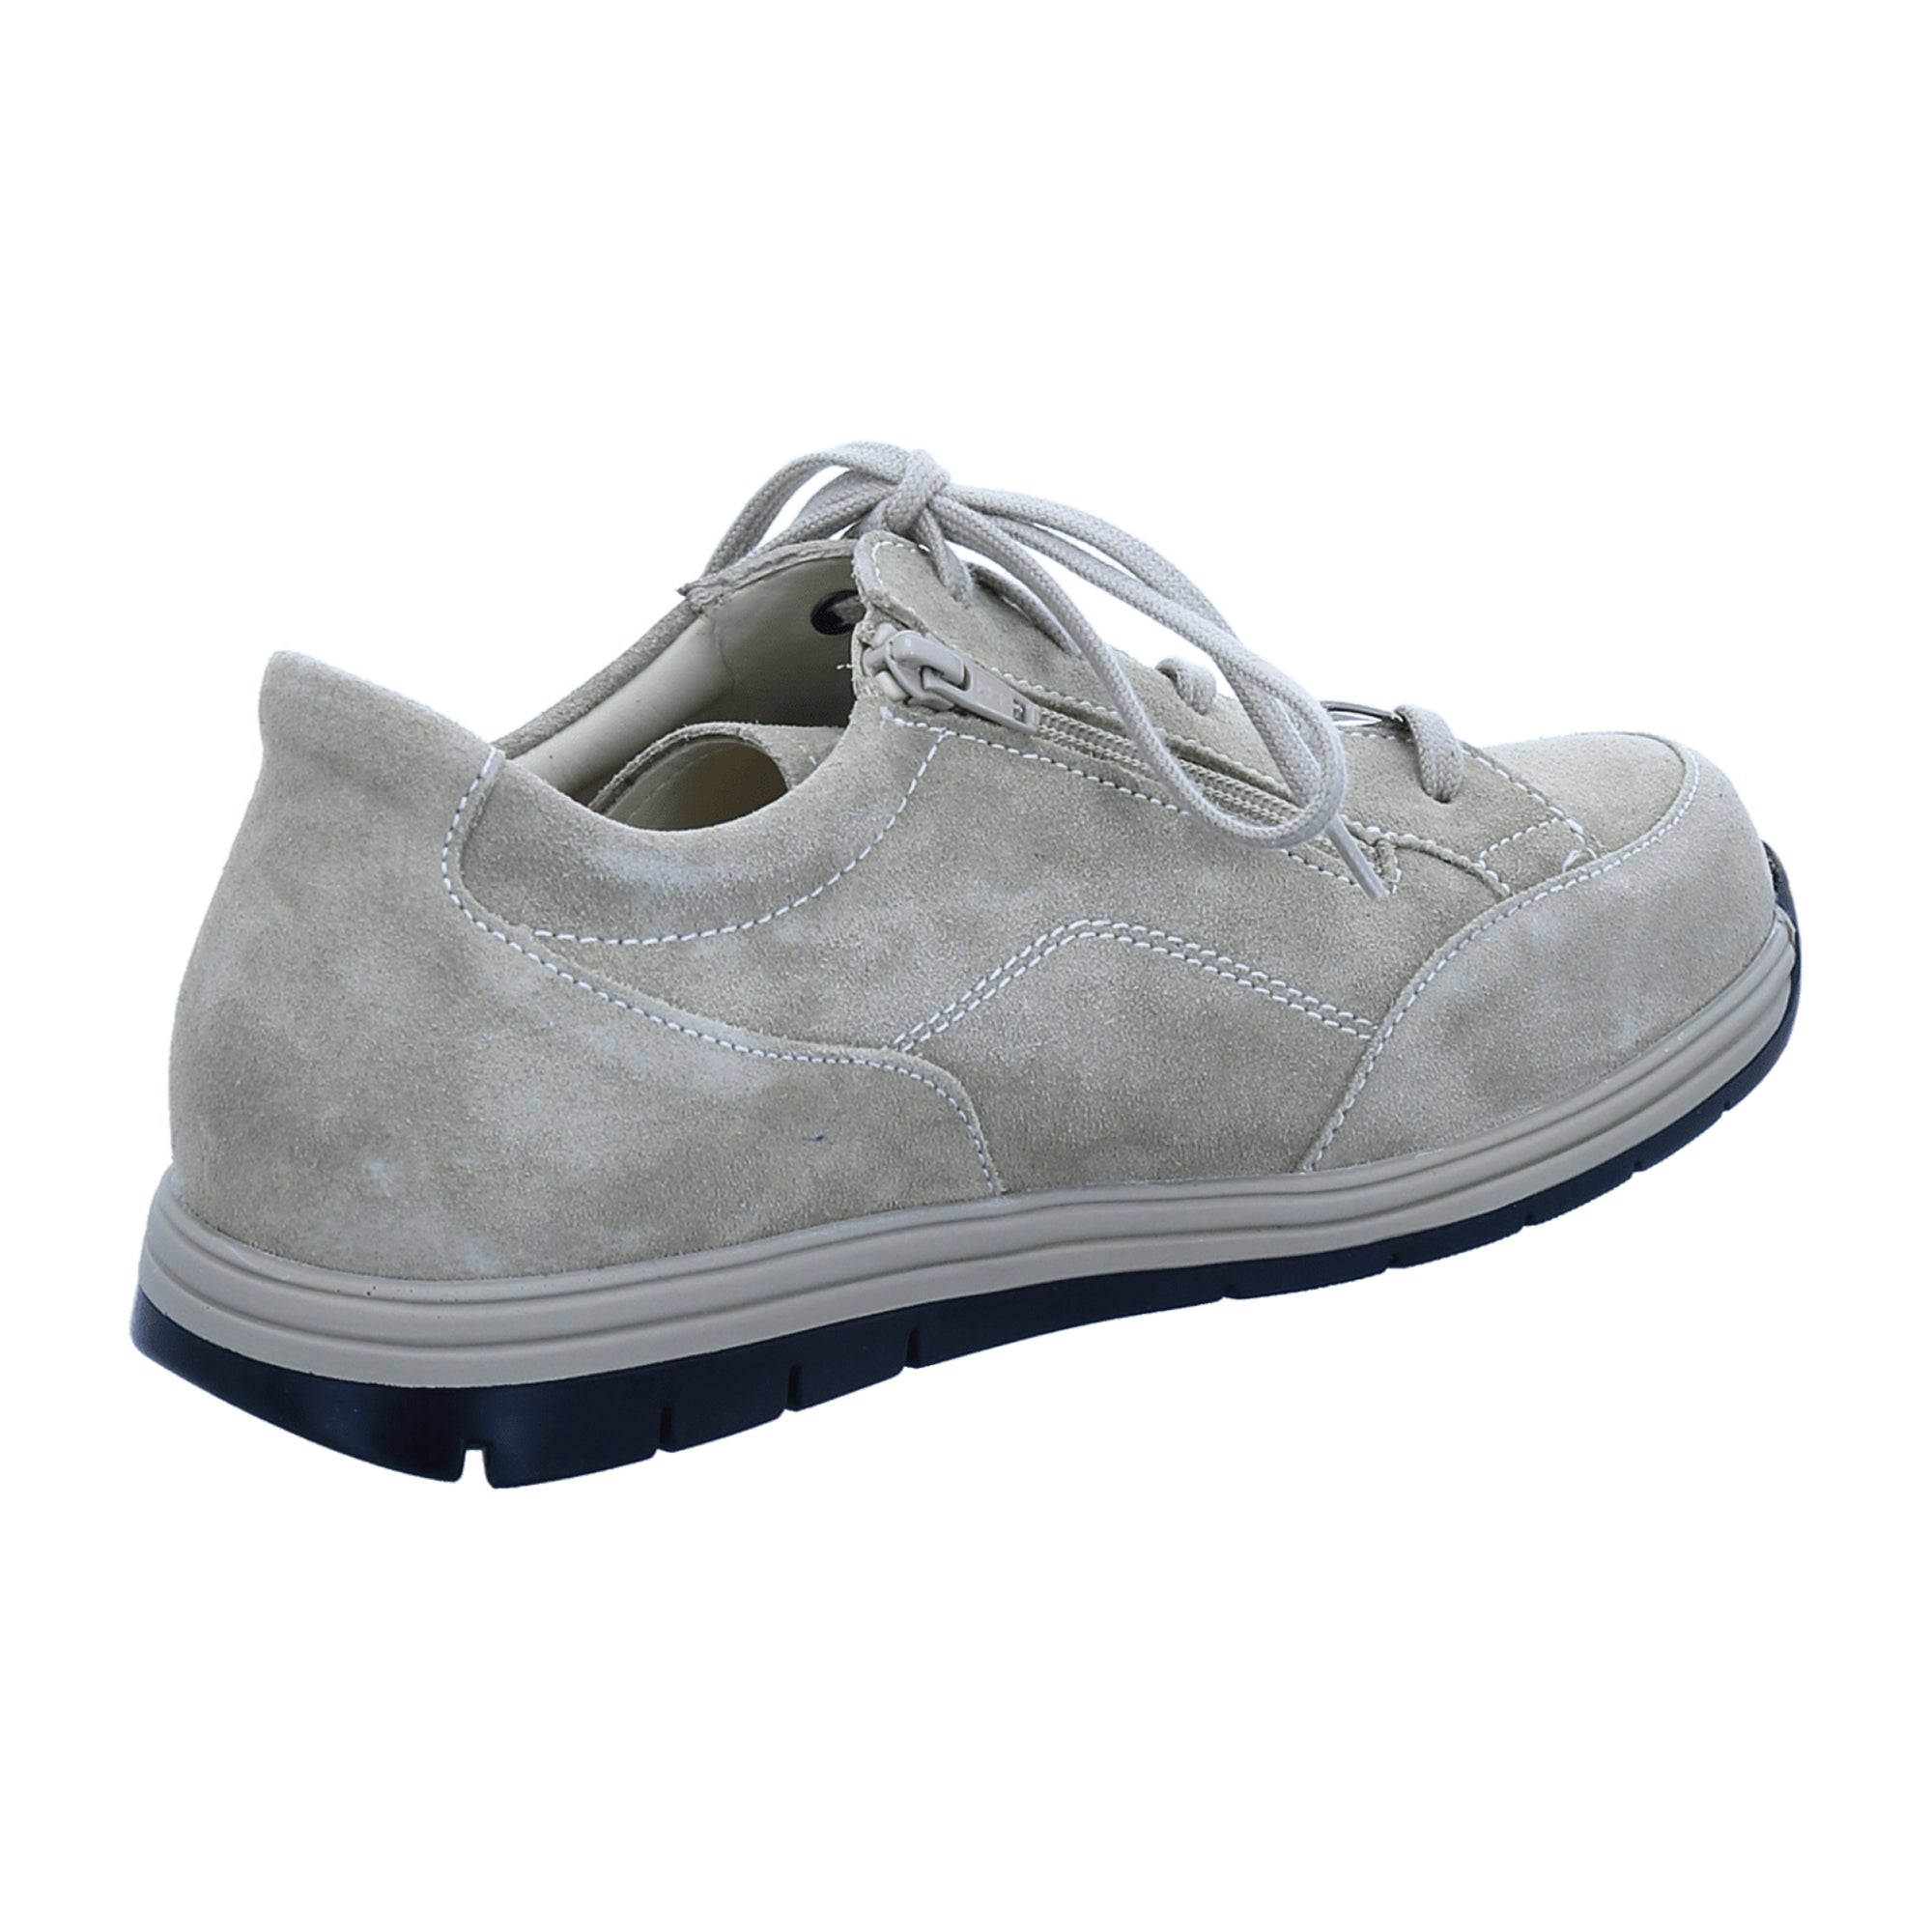 Finn Comfort Osorno Men's Comfort Shoes in Beige - Stylish & Durable